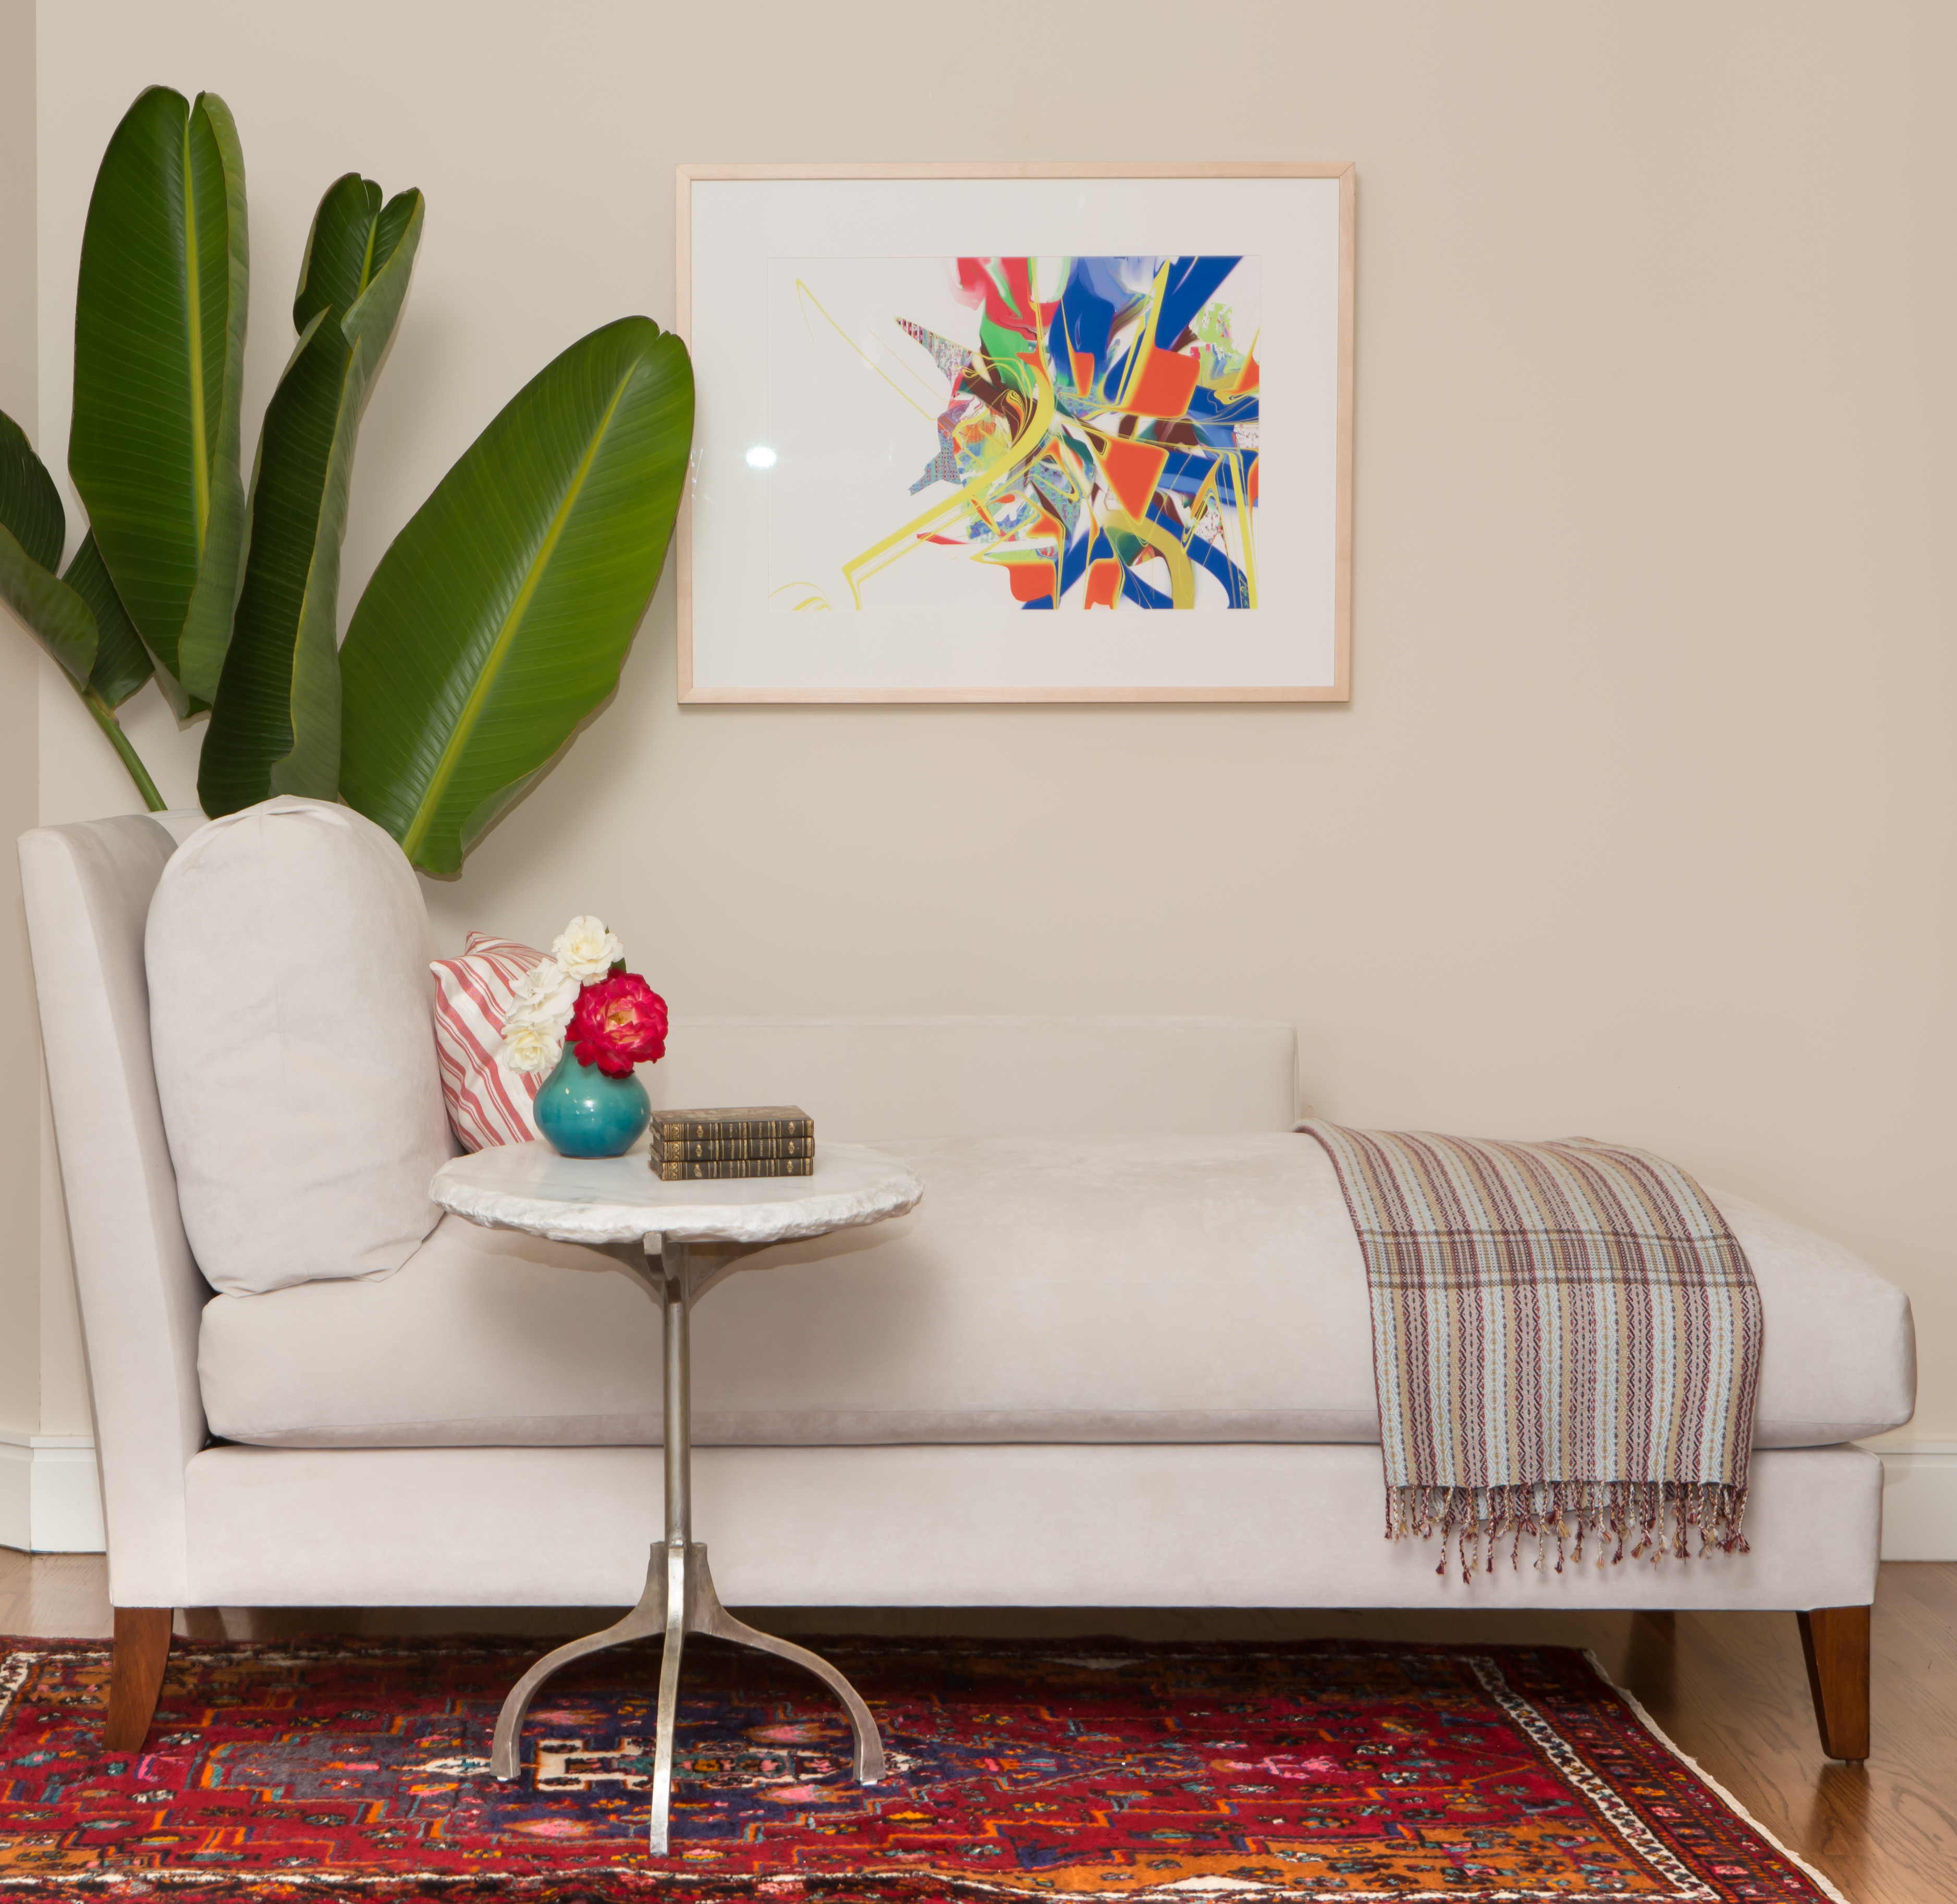 Contemporary Style in san diego home designed by celebrity interior designer Lori Dennis